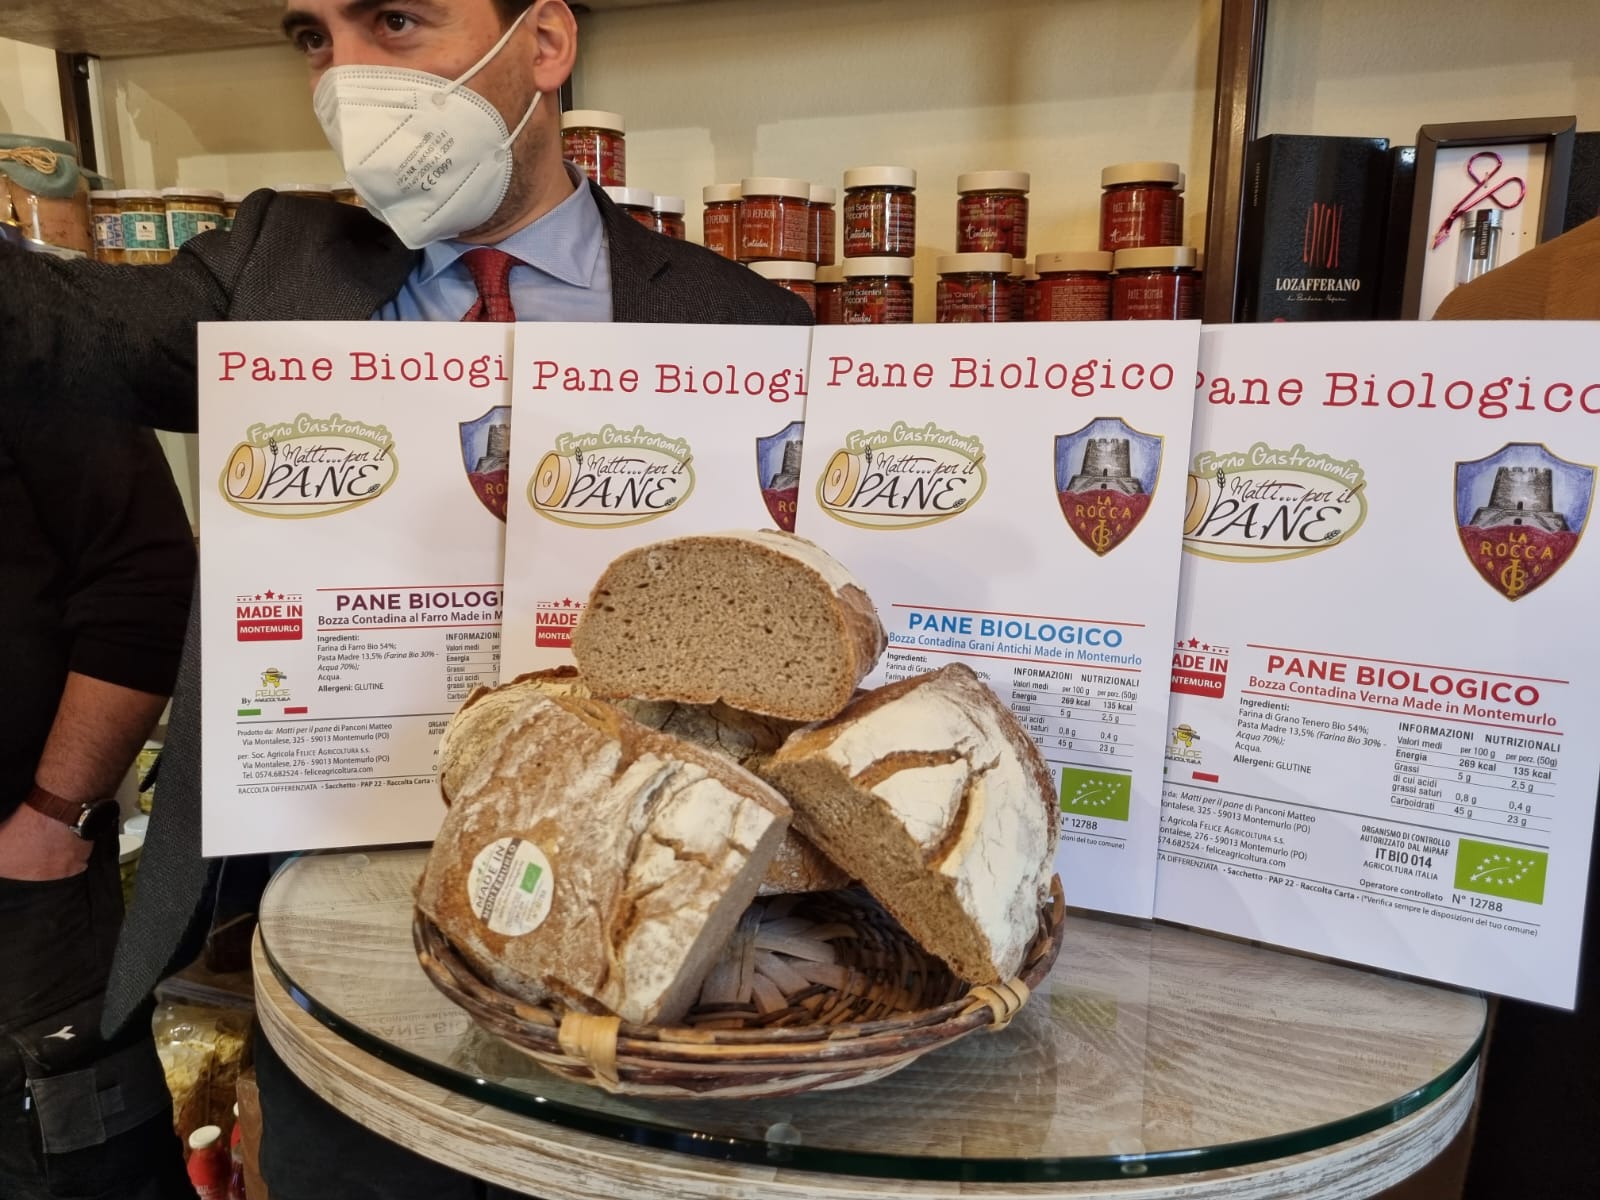 Pane biologico 100% made in Montemurlo